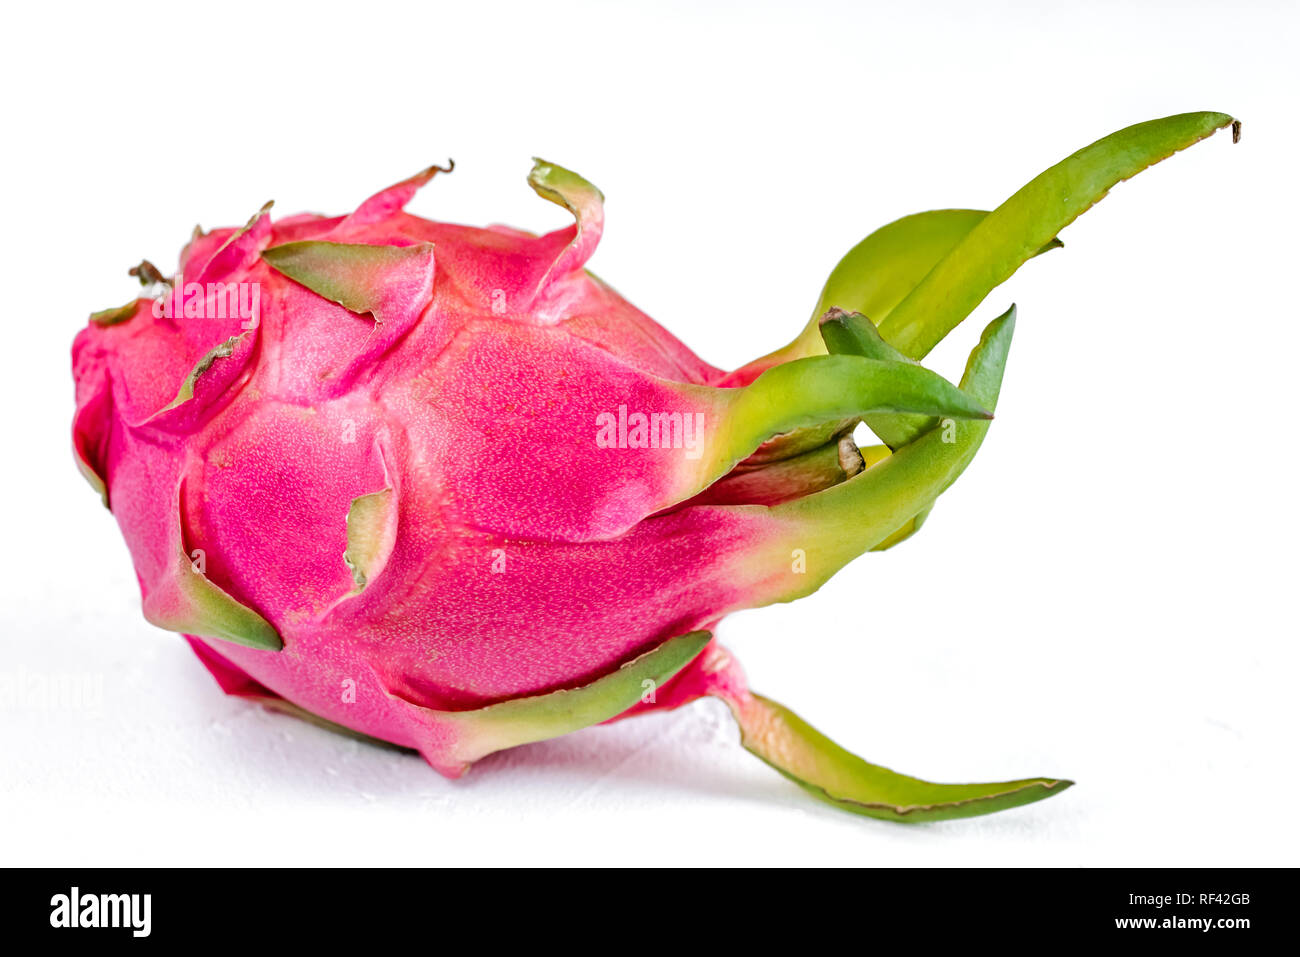 Rosa pitaya fotografías e imágenes de alta resolución - Alamy